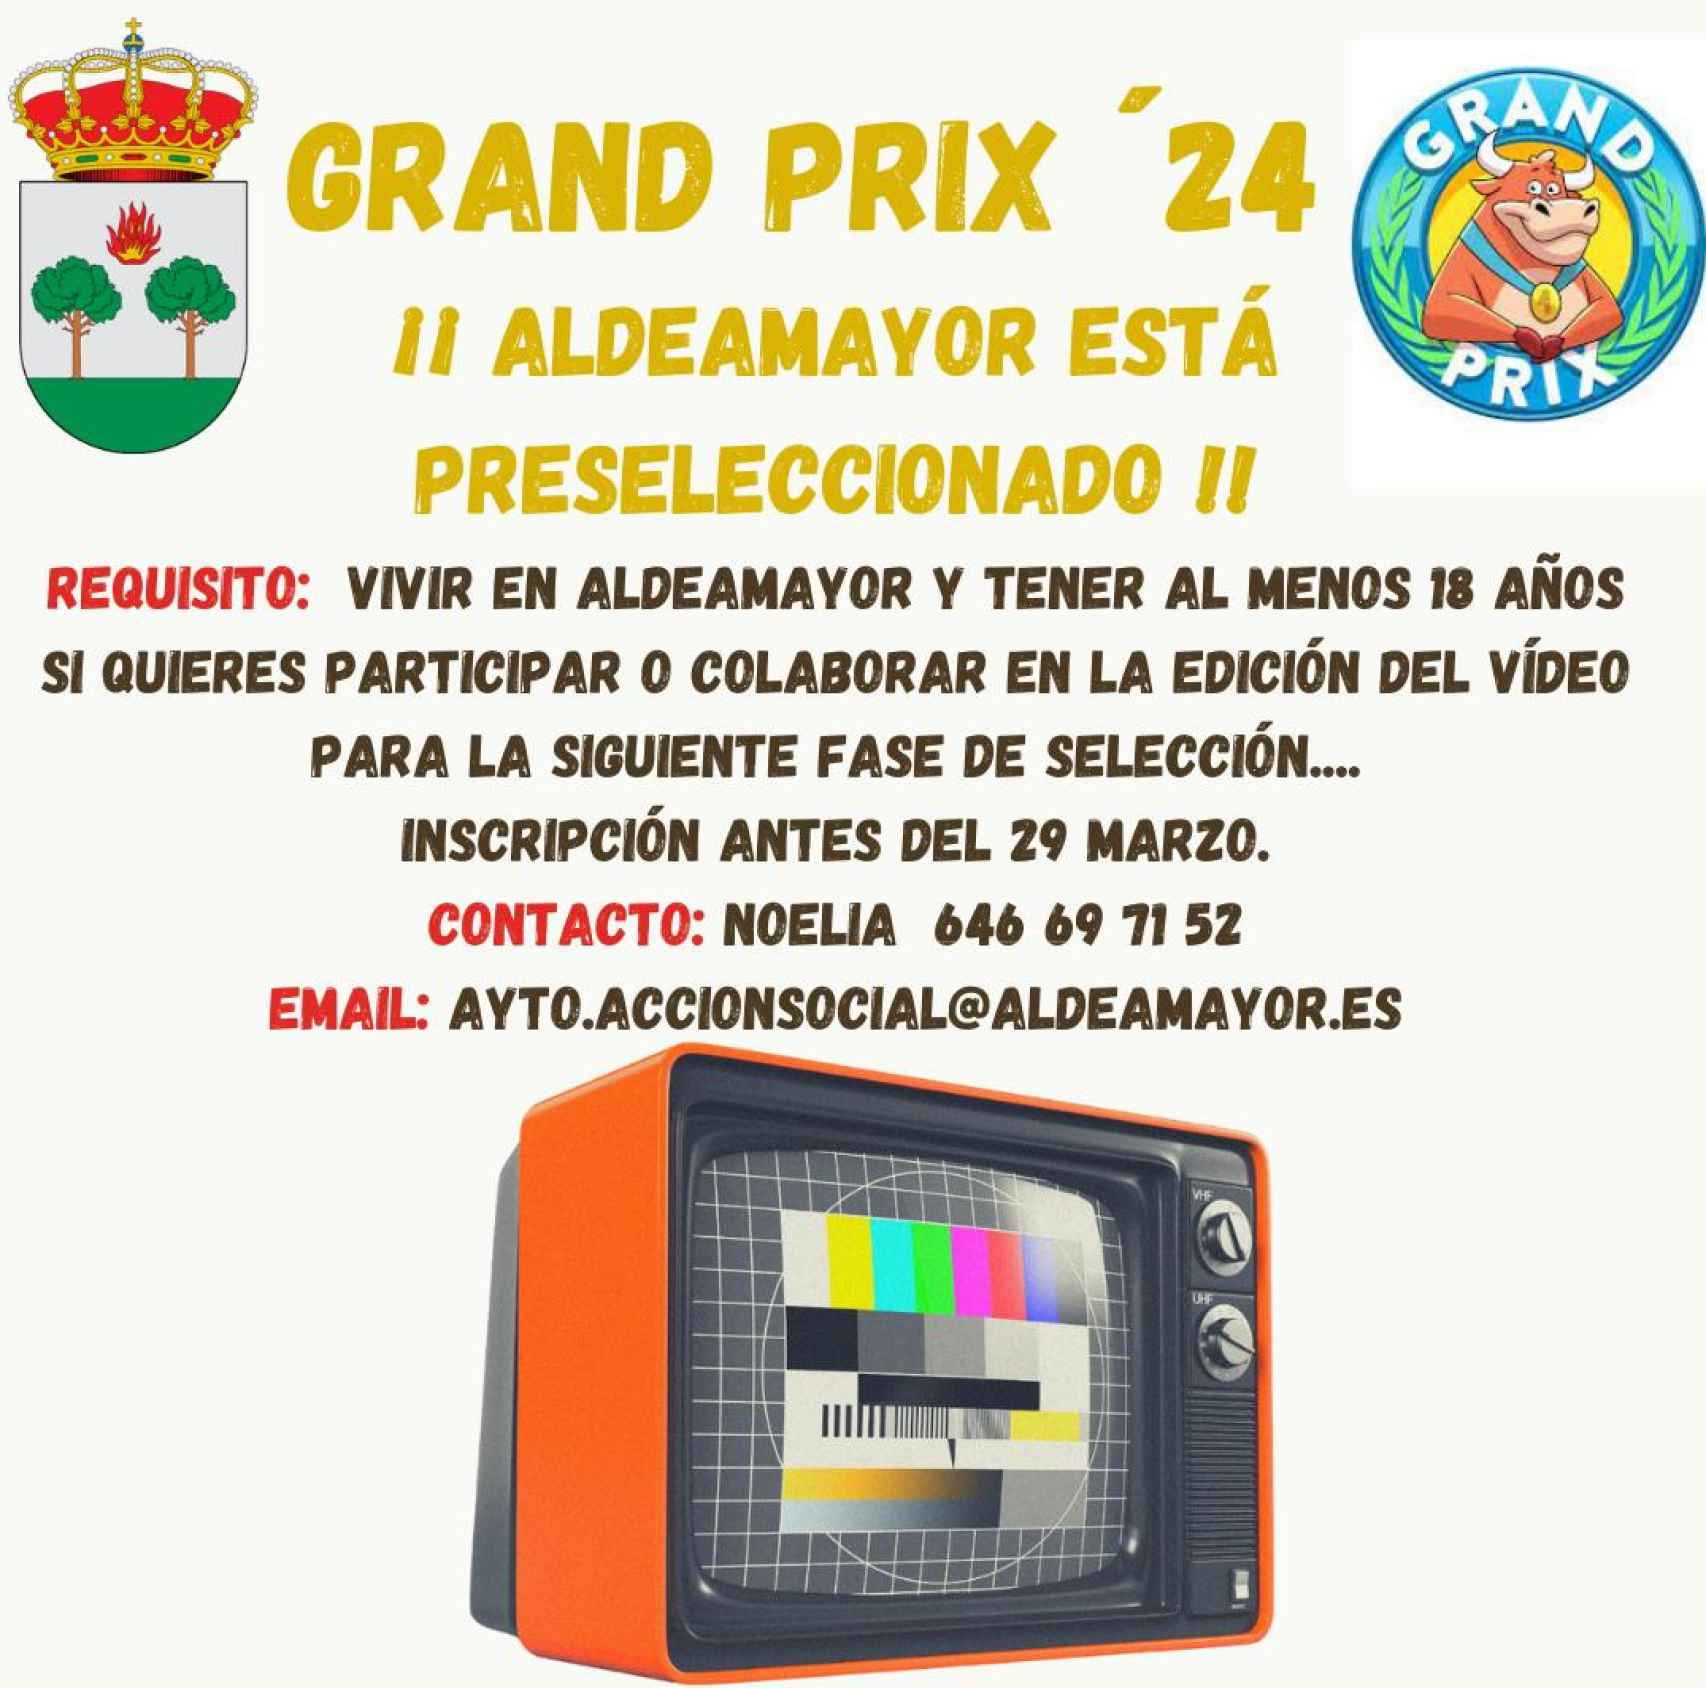 Convocatoria de Aladeamayor para grabar un vídeo para el Grand Prix